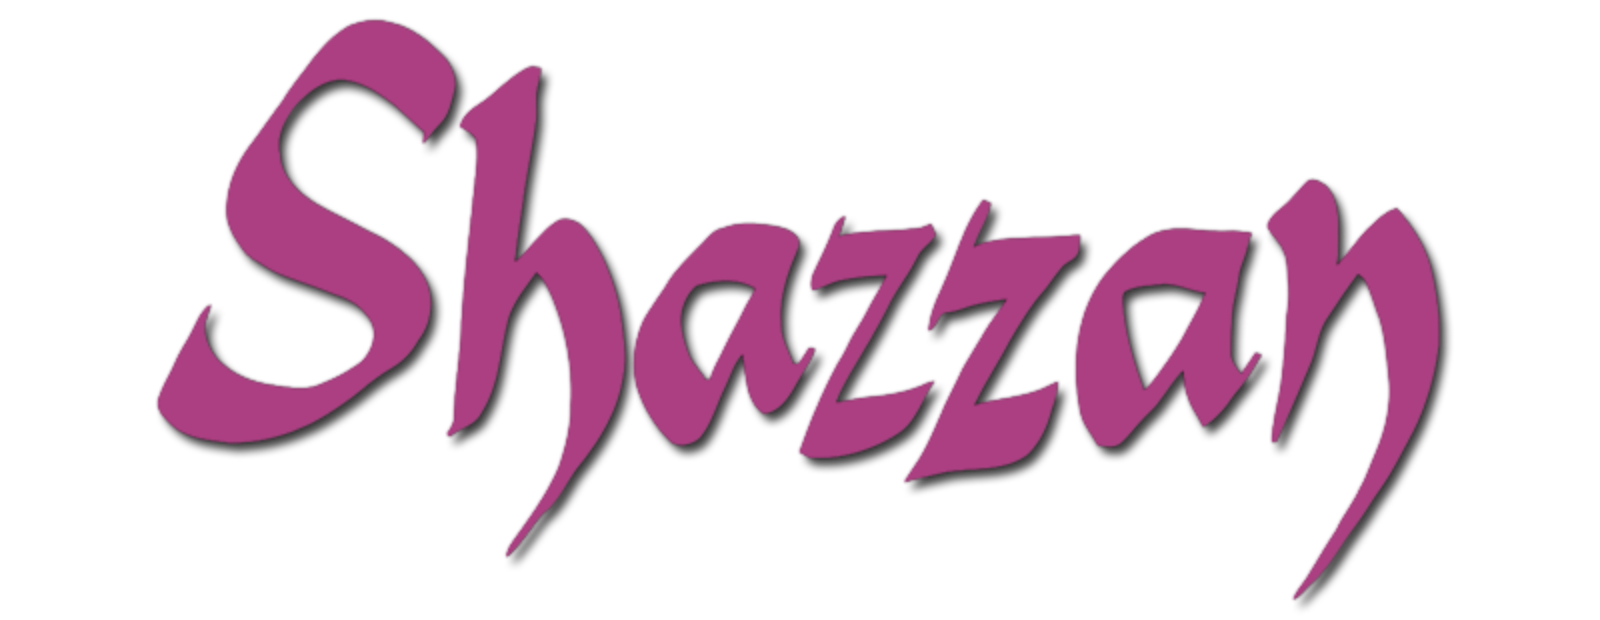 Shazzan Complete (2 DVDs Box Set)